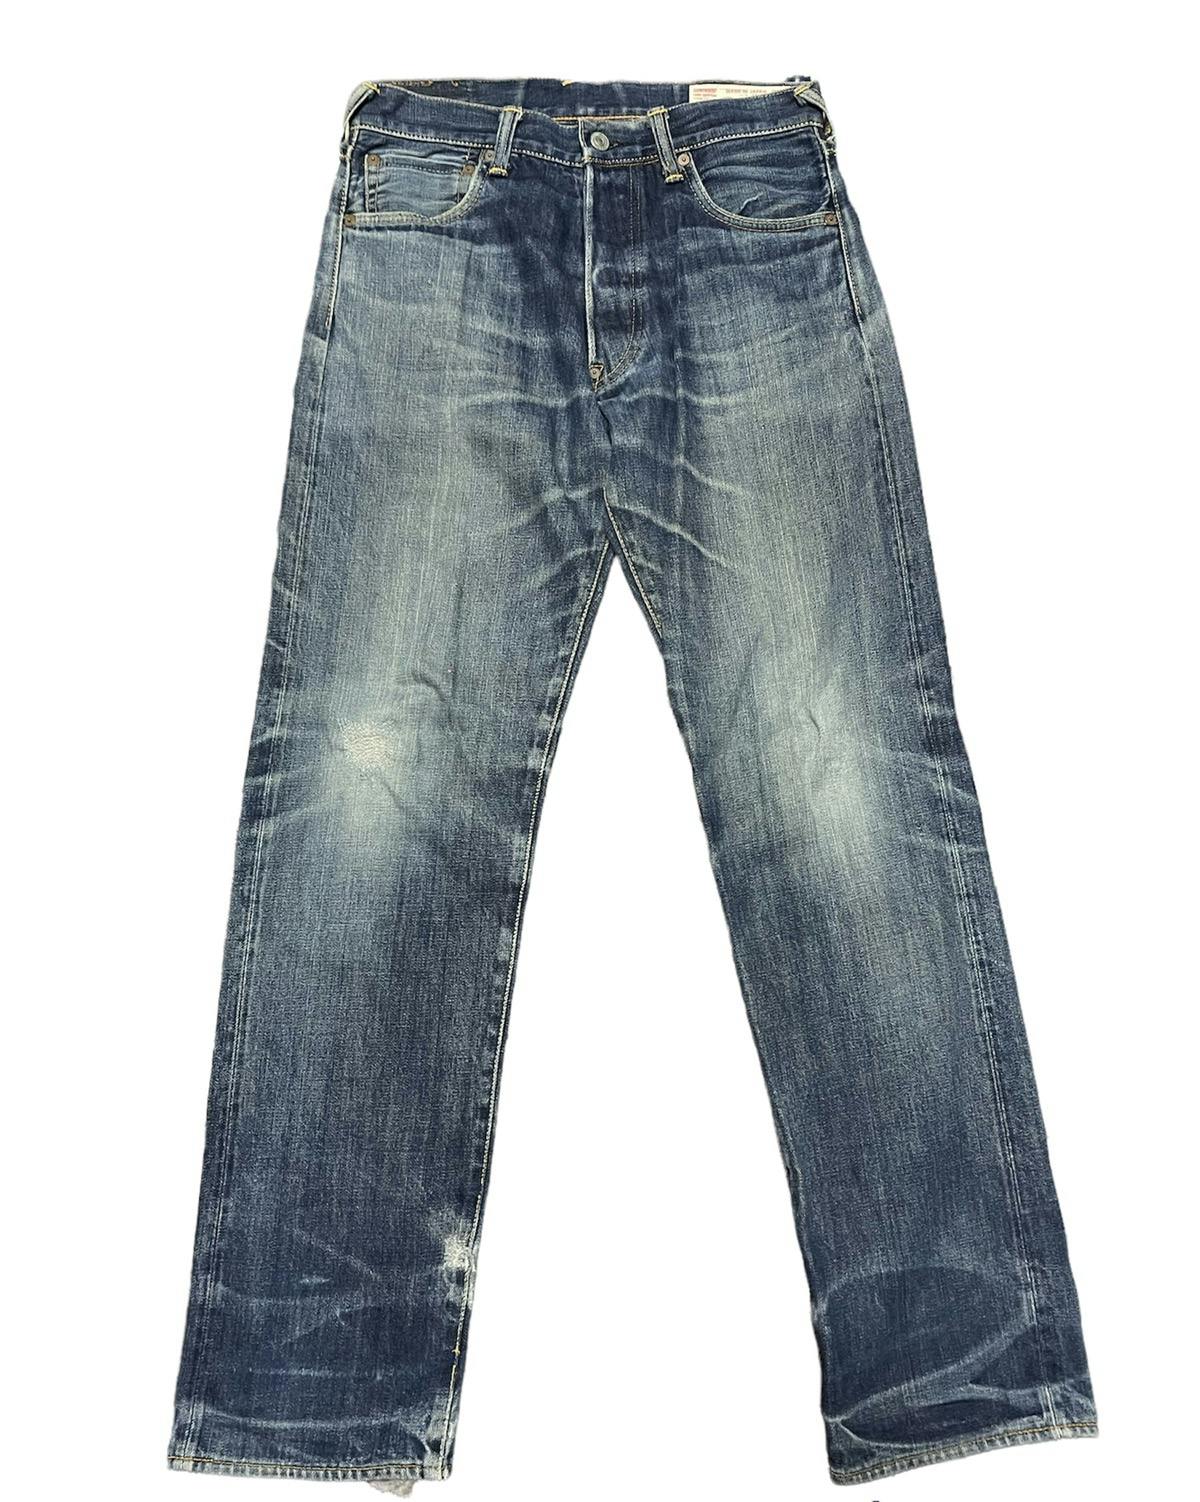 Yamane selevedge jeans distressed - 2